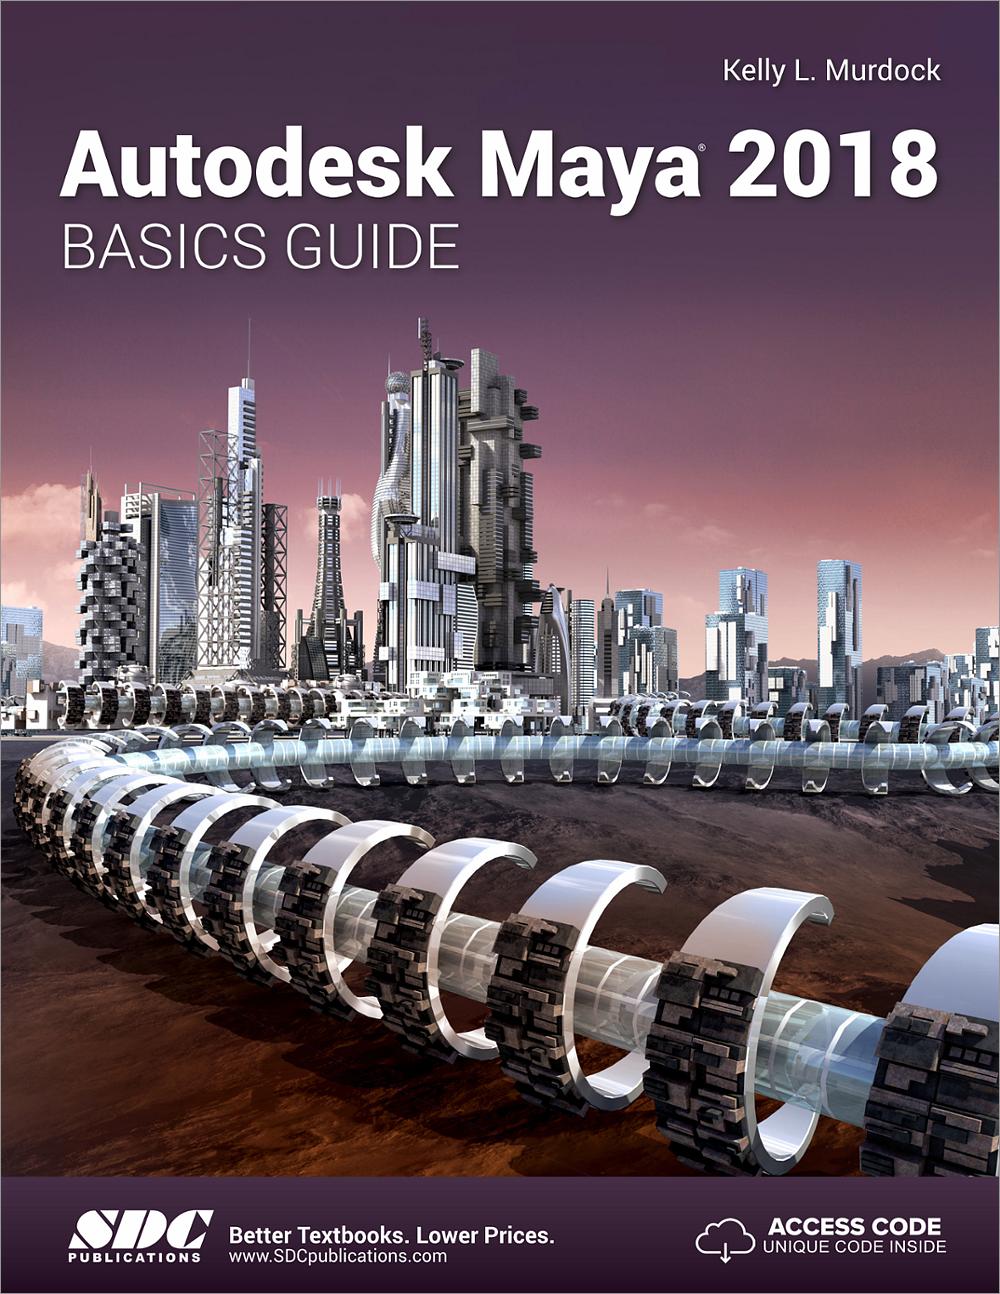 autodesk maya 2020 price